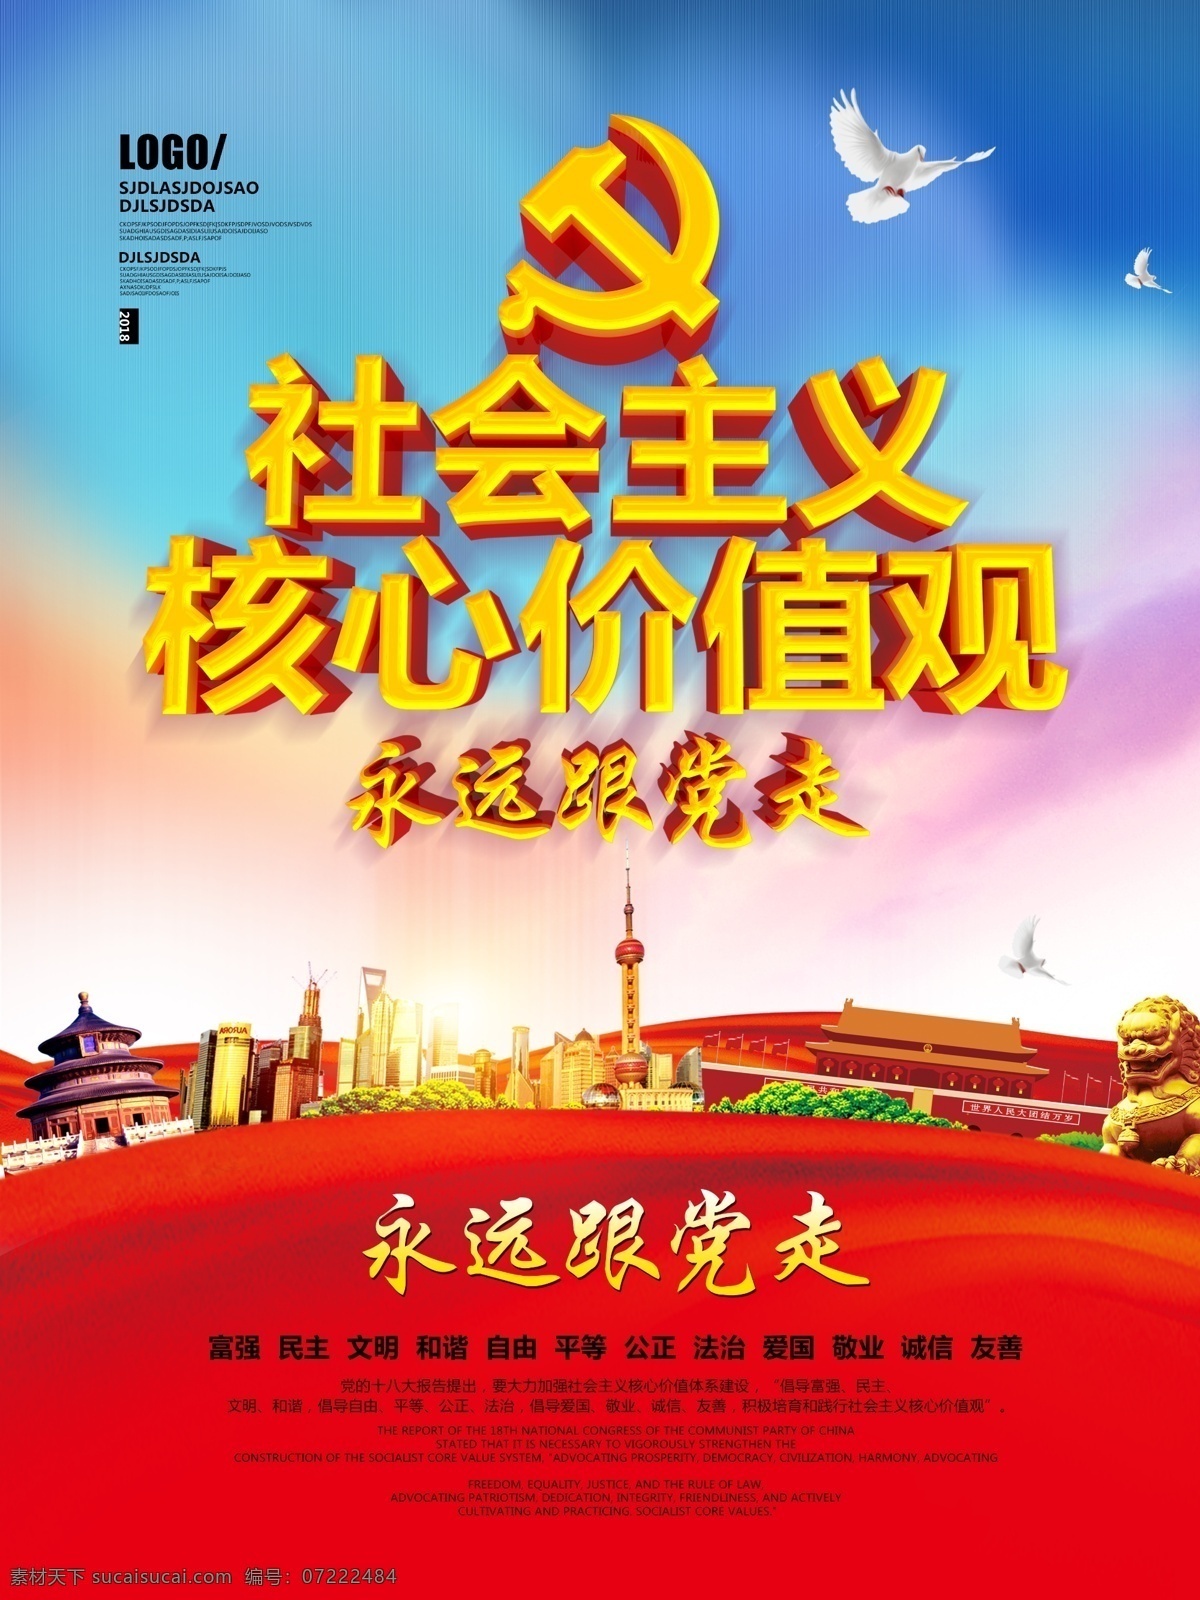 c4d 立体 字 核心 价值观 党建 系列 海报 立体字 社会主义 天安门 故宫